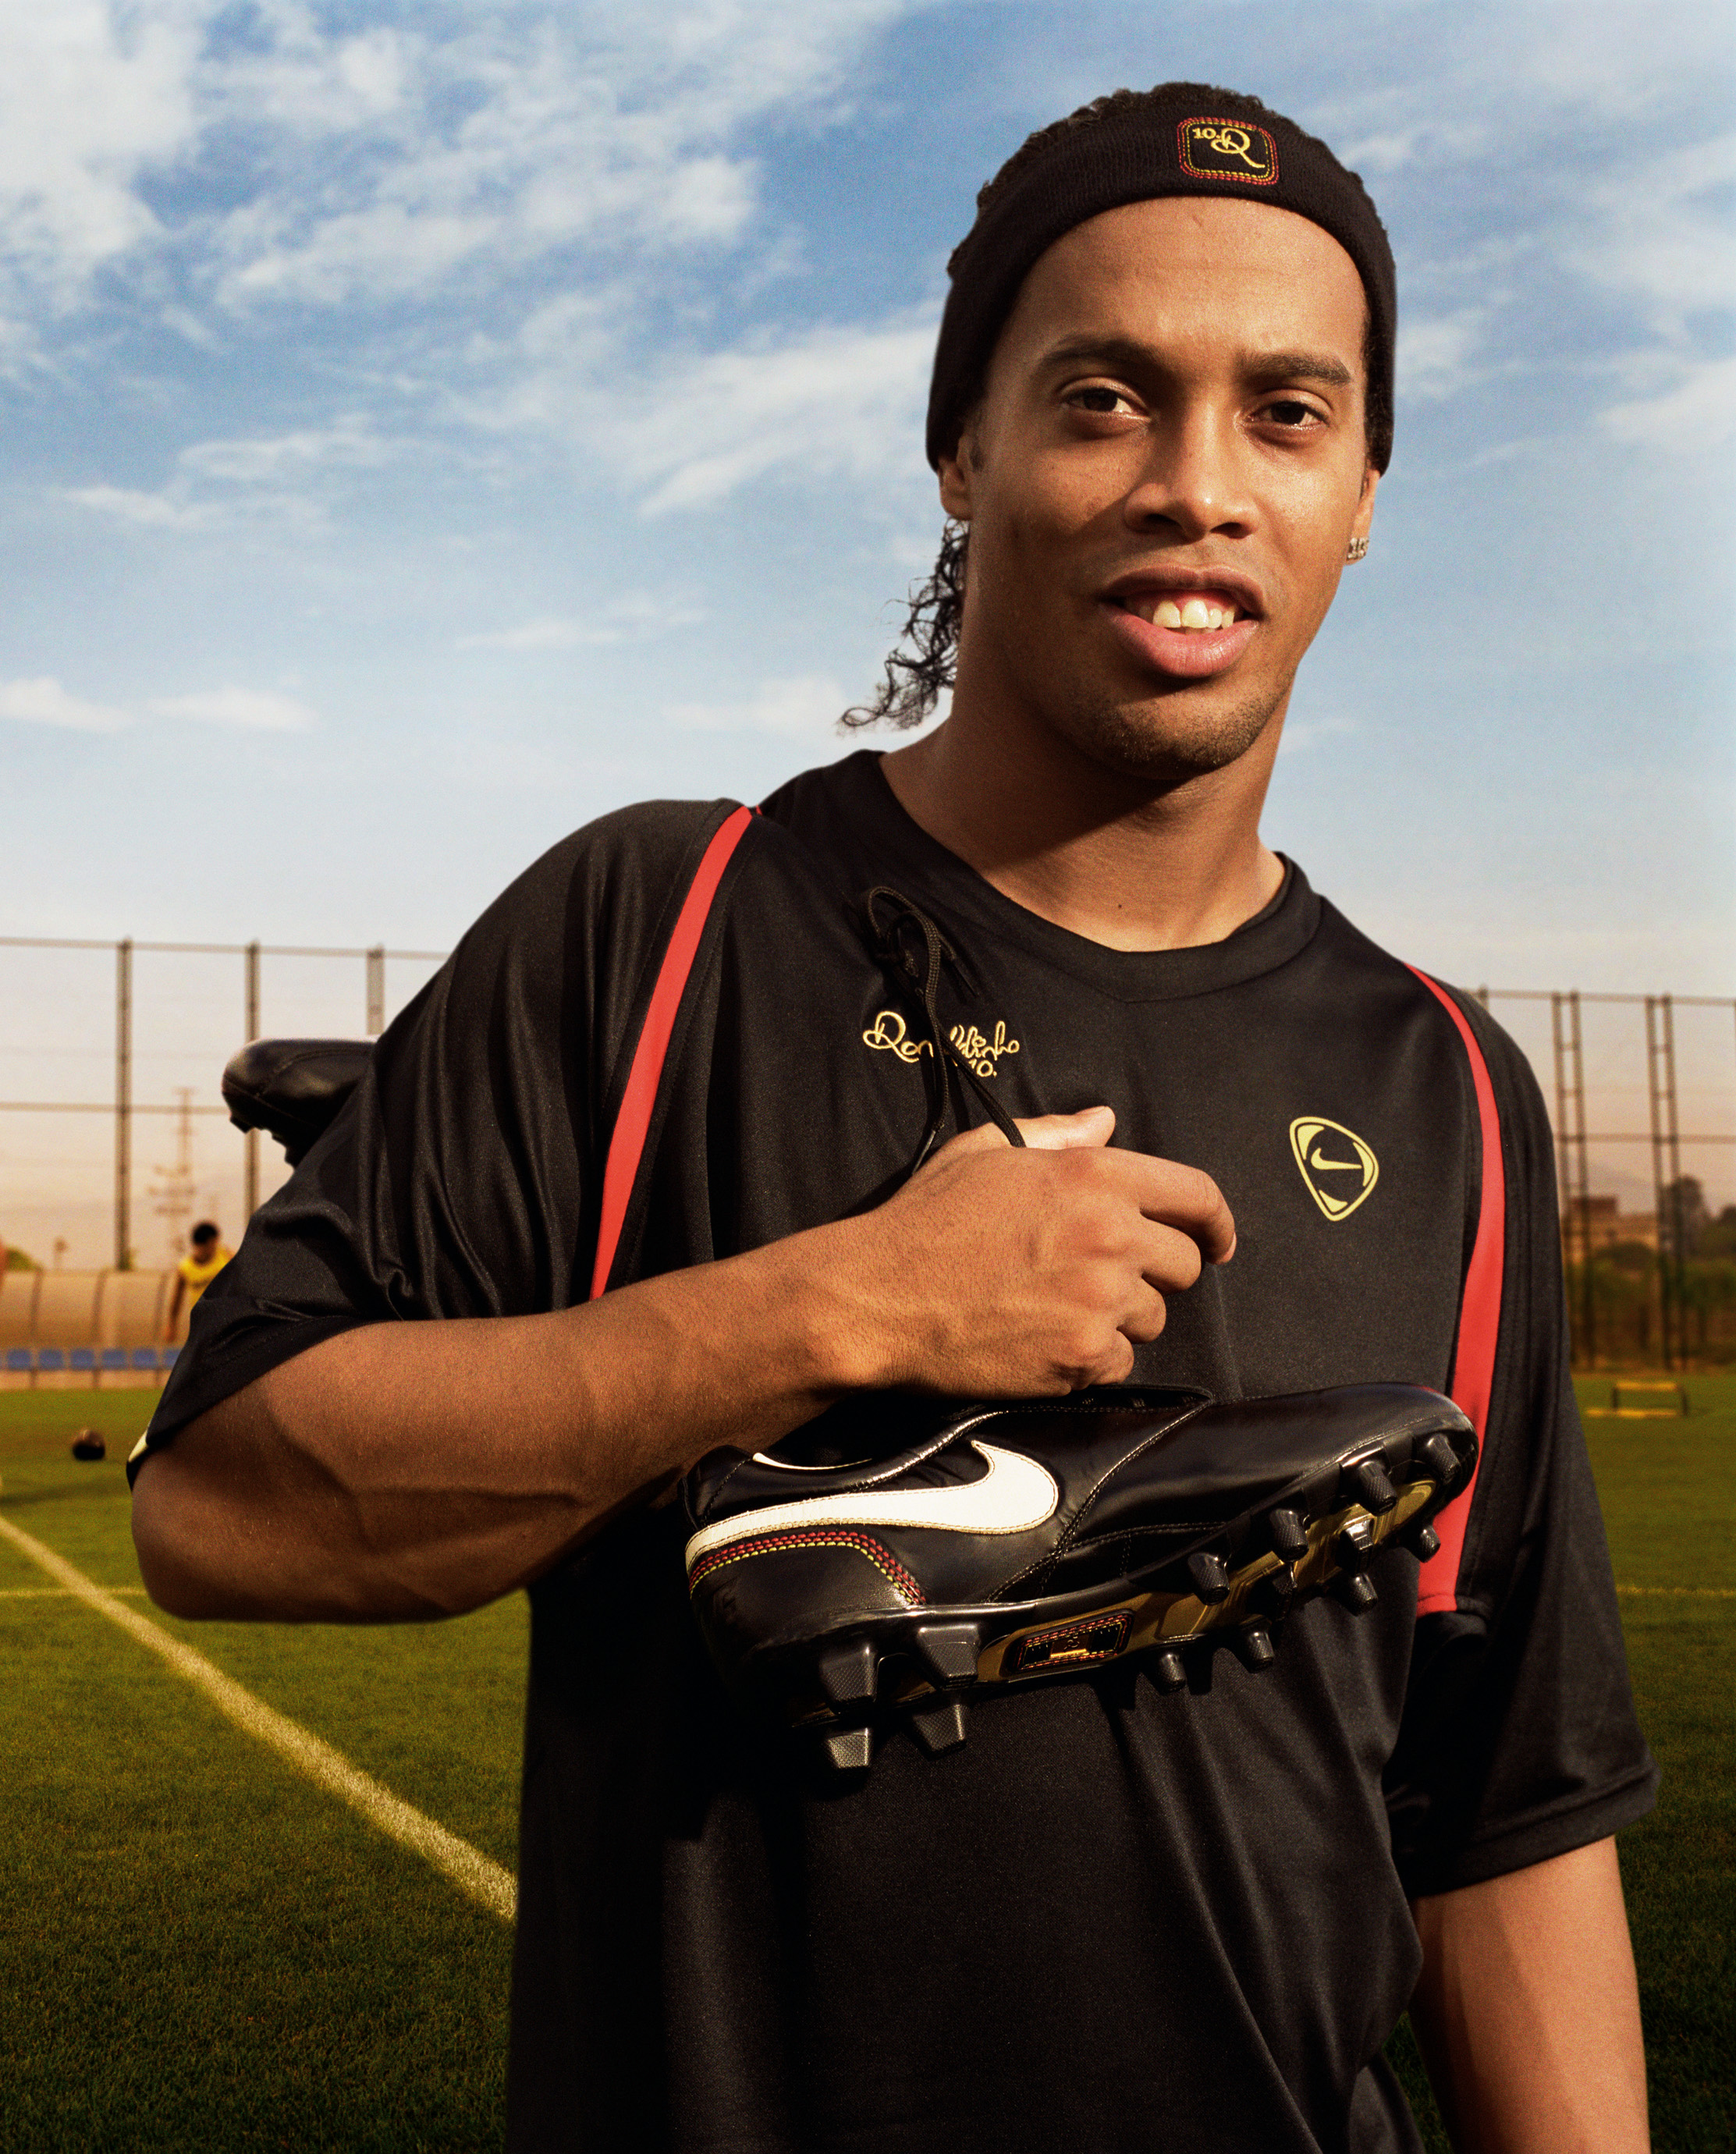 http://www.caughtoffside.com/wp-content/uploads/2007/01/Ronaldinho_20_10R_Boot_011.jpg